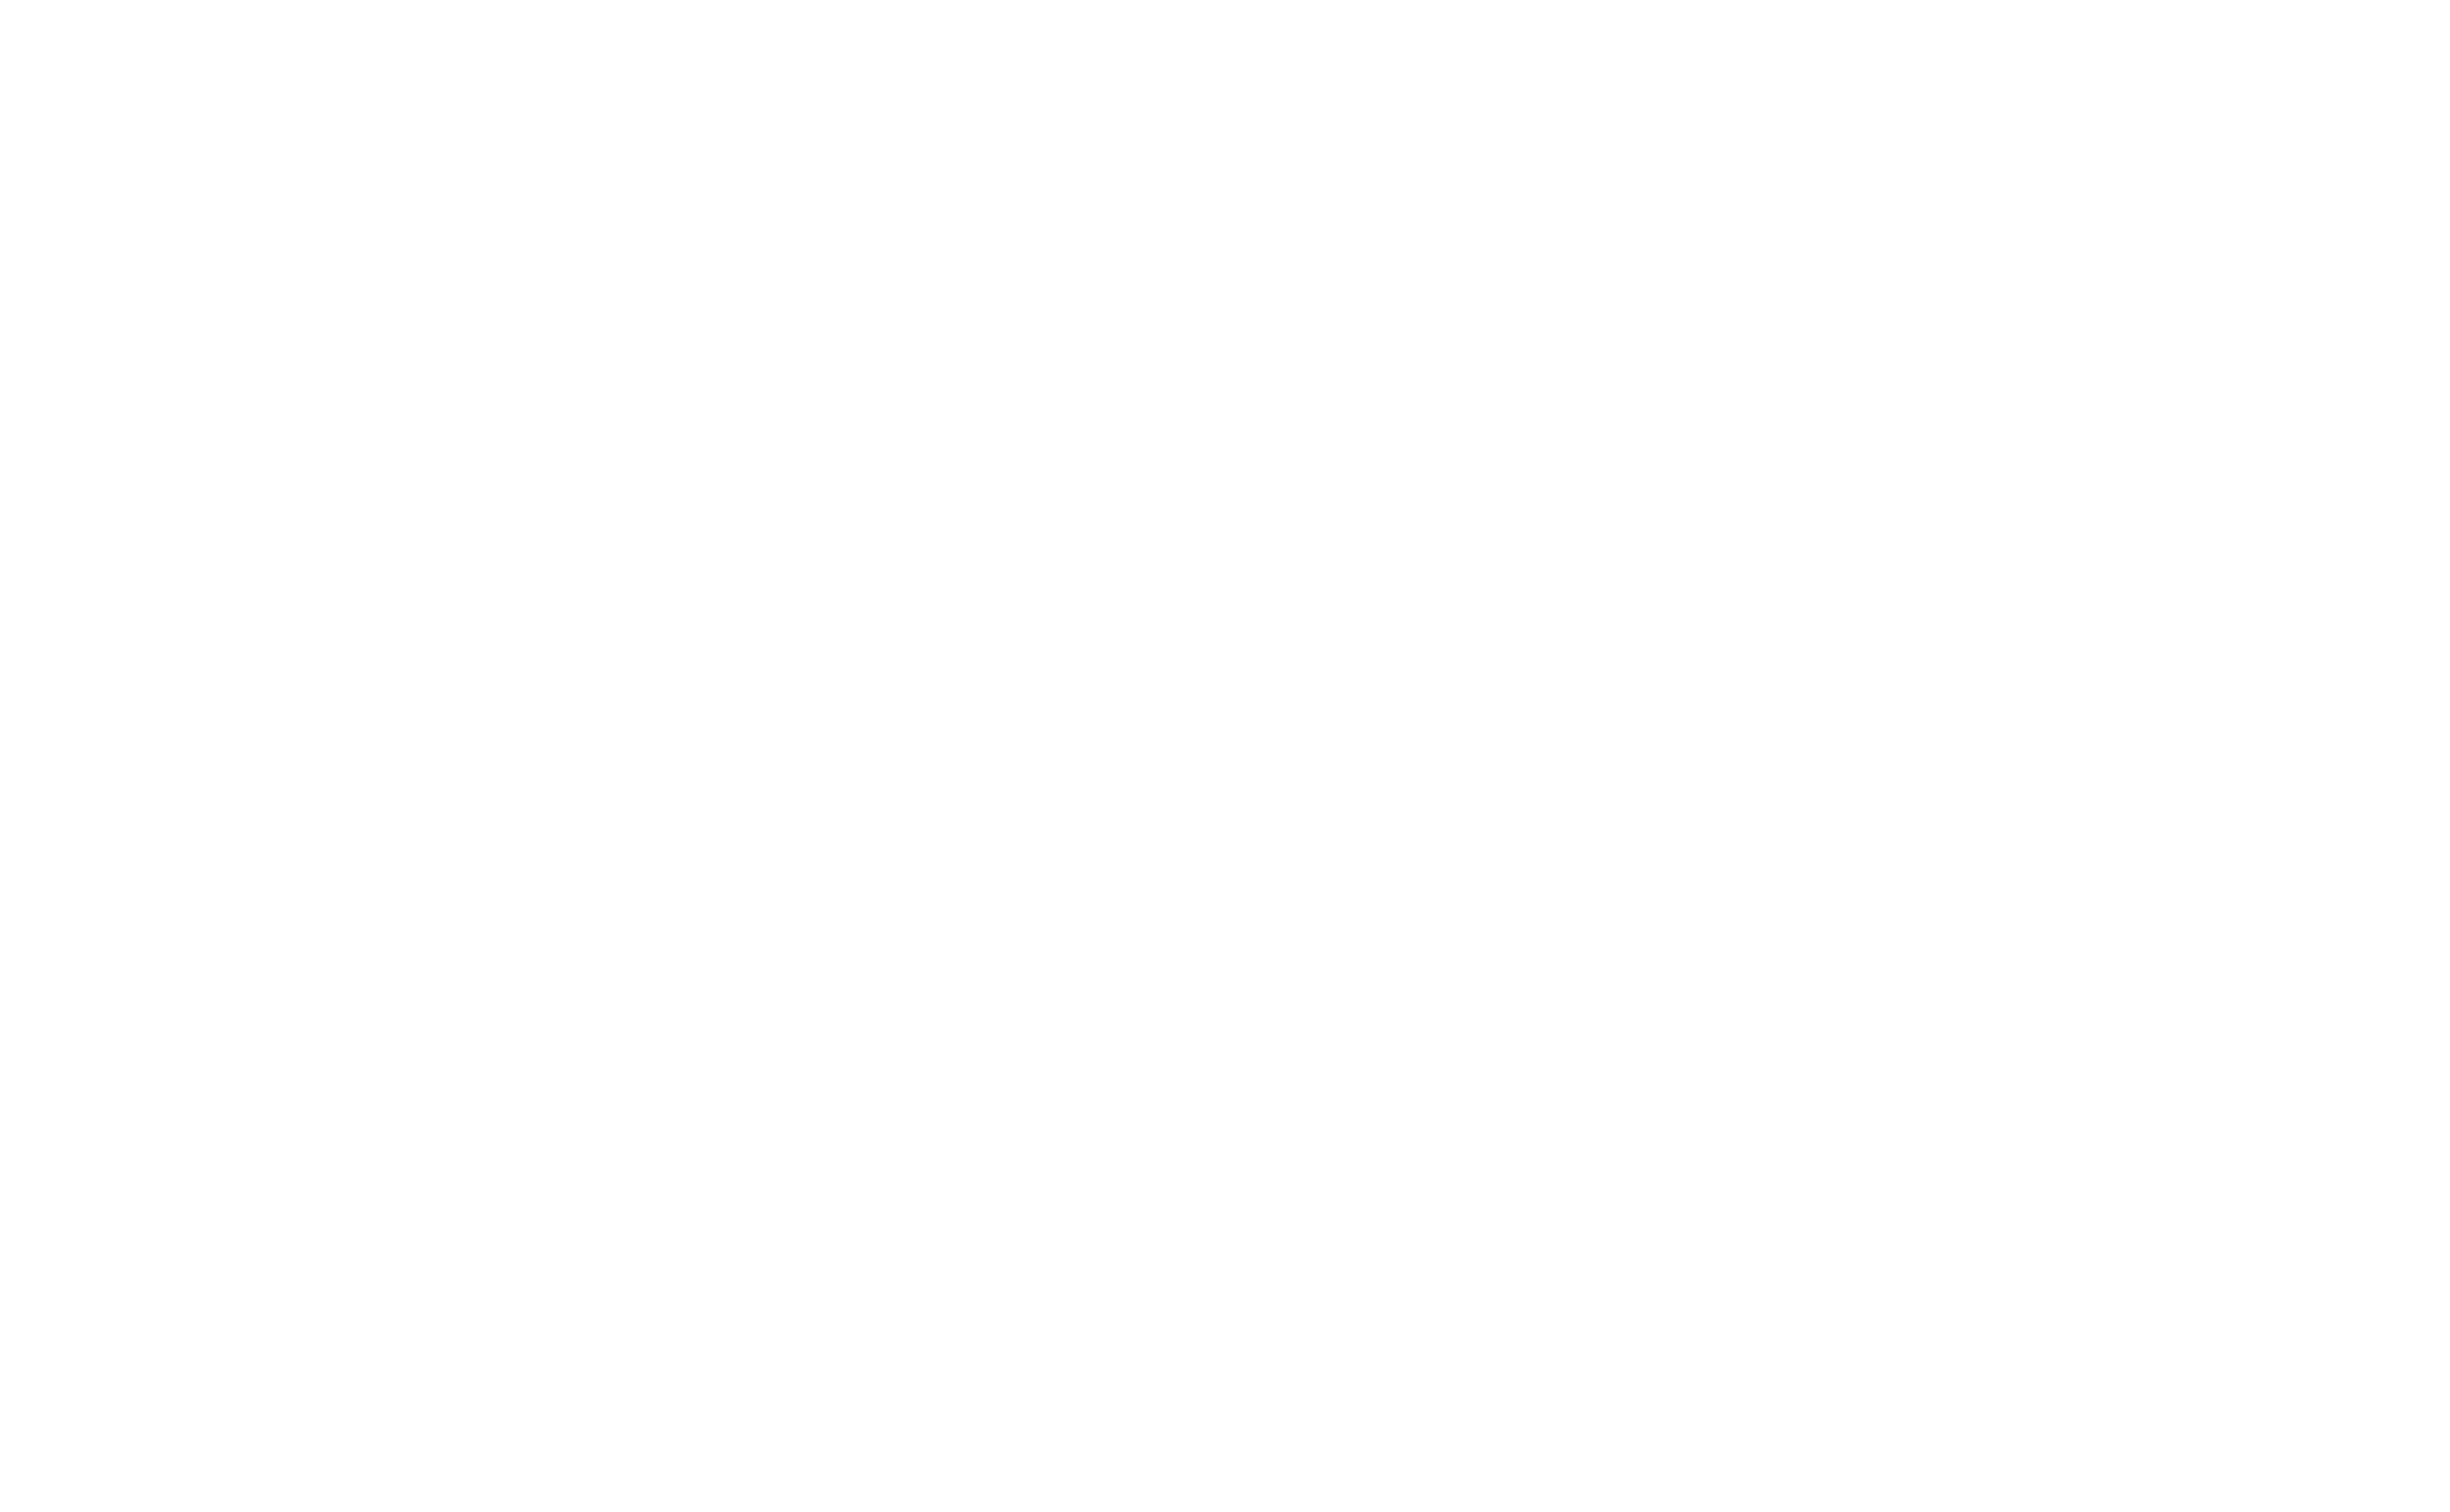 SCEE Group Logo